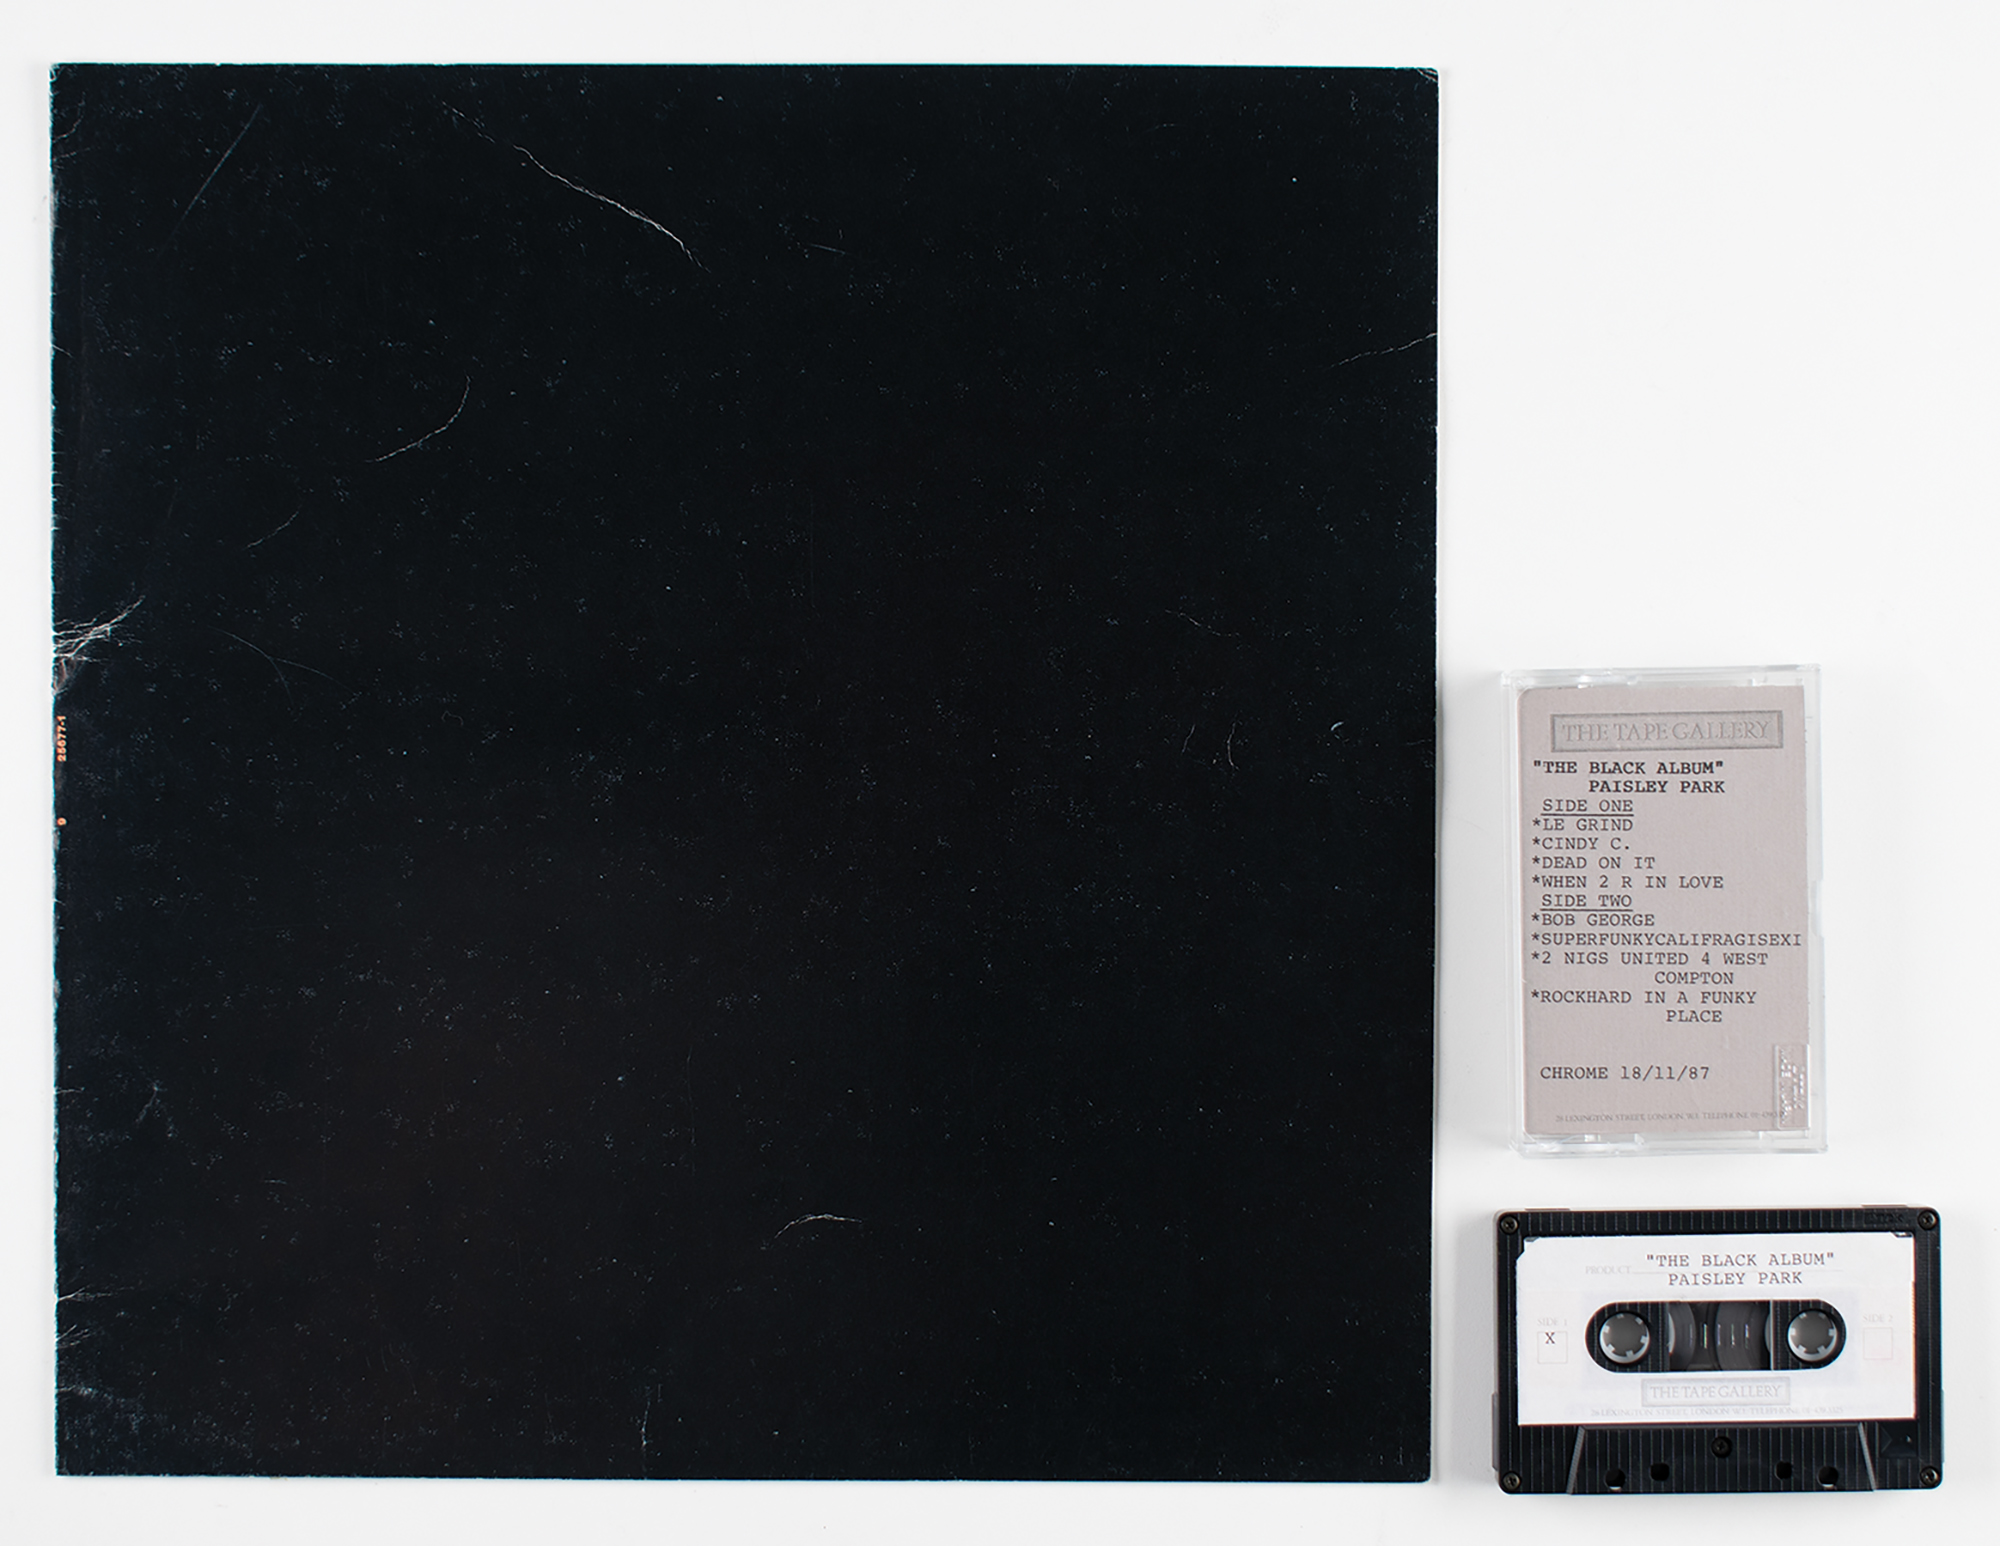 Lot #738 Prince: 1987 Black Album UK Promo Cassette and Sleeve